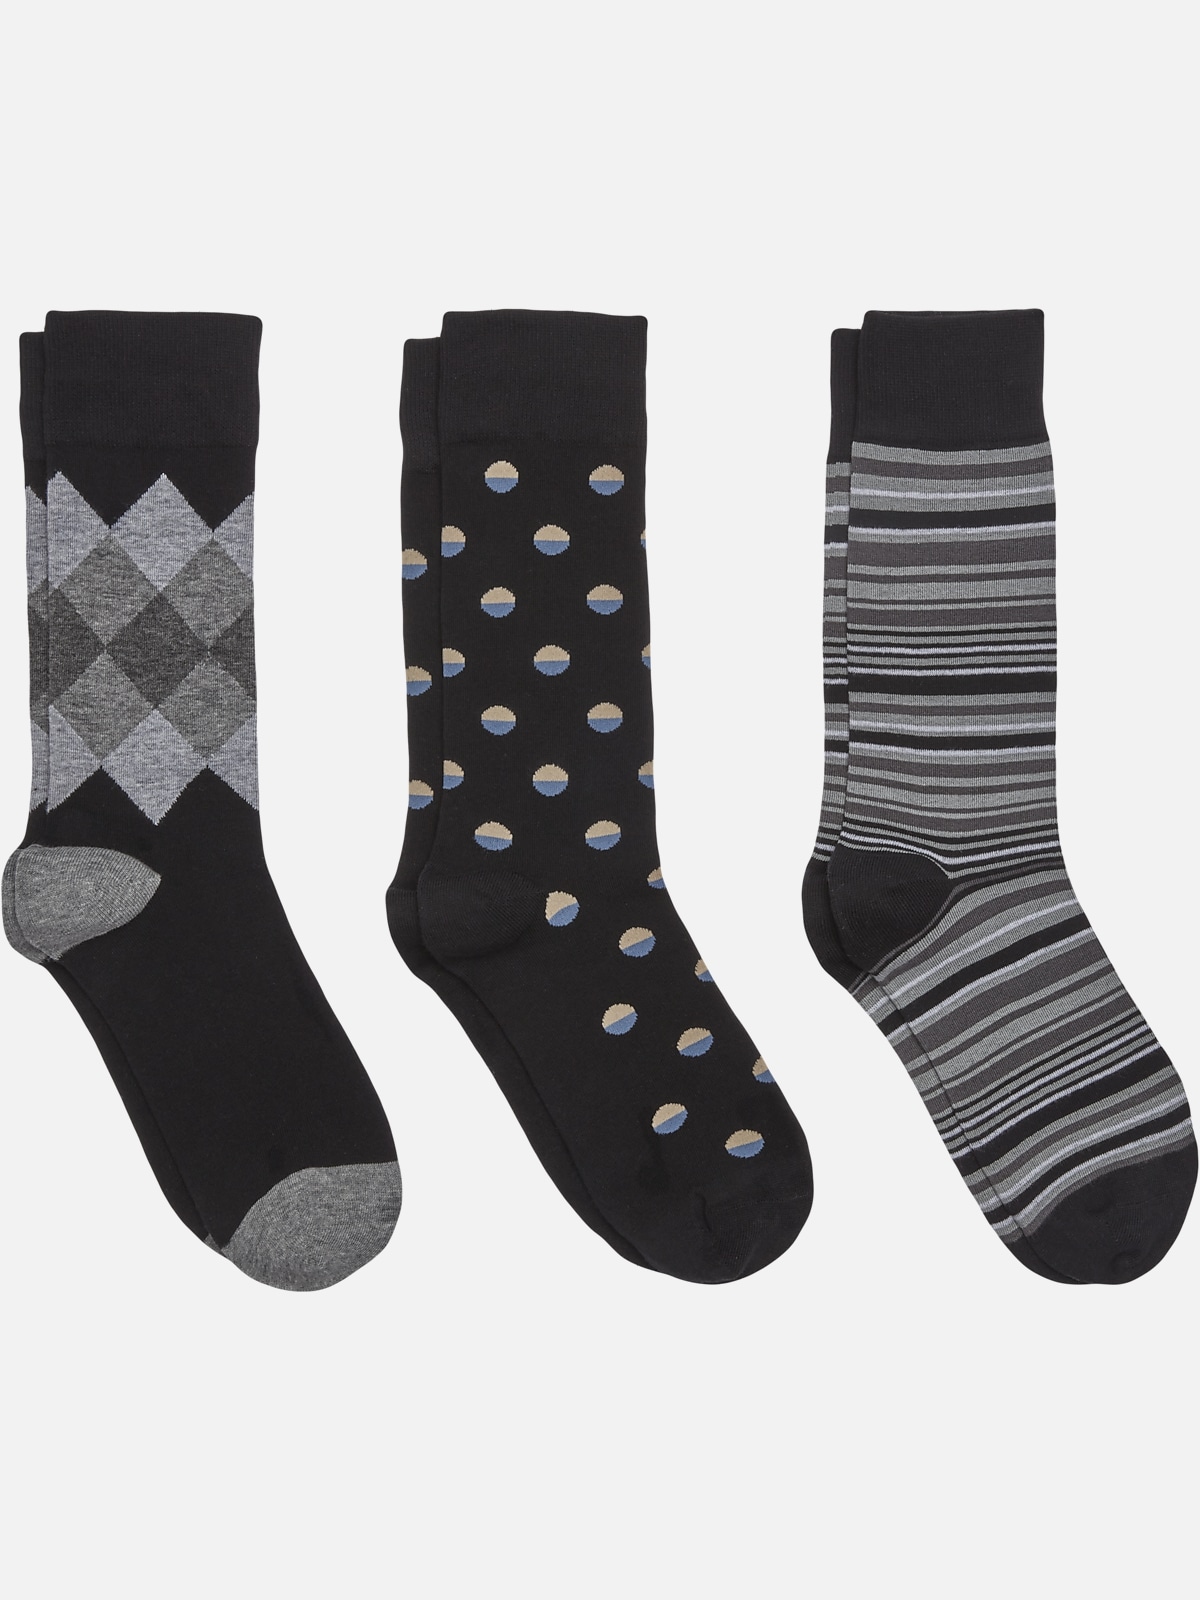 Egara Patterned Socks, 3-Pack | All Sale| Men's Wearhouse